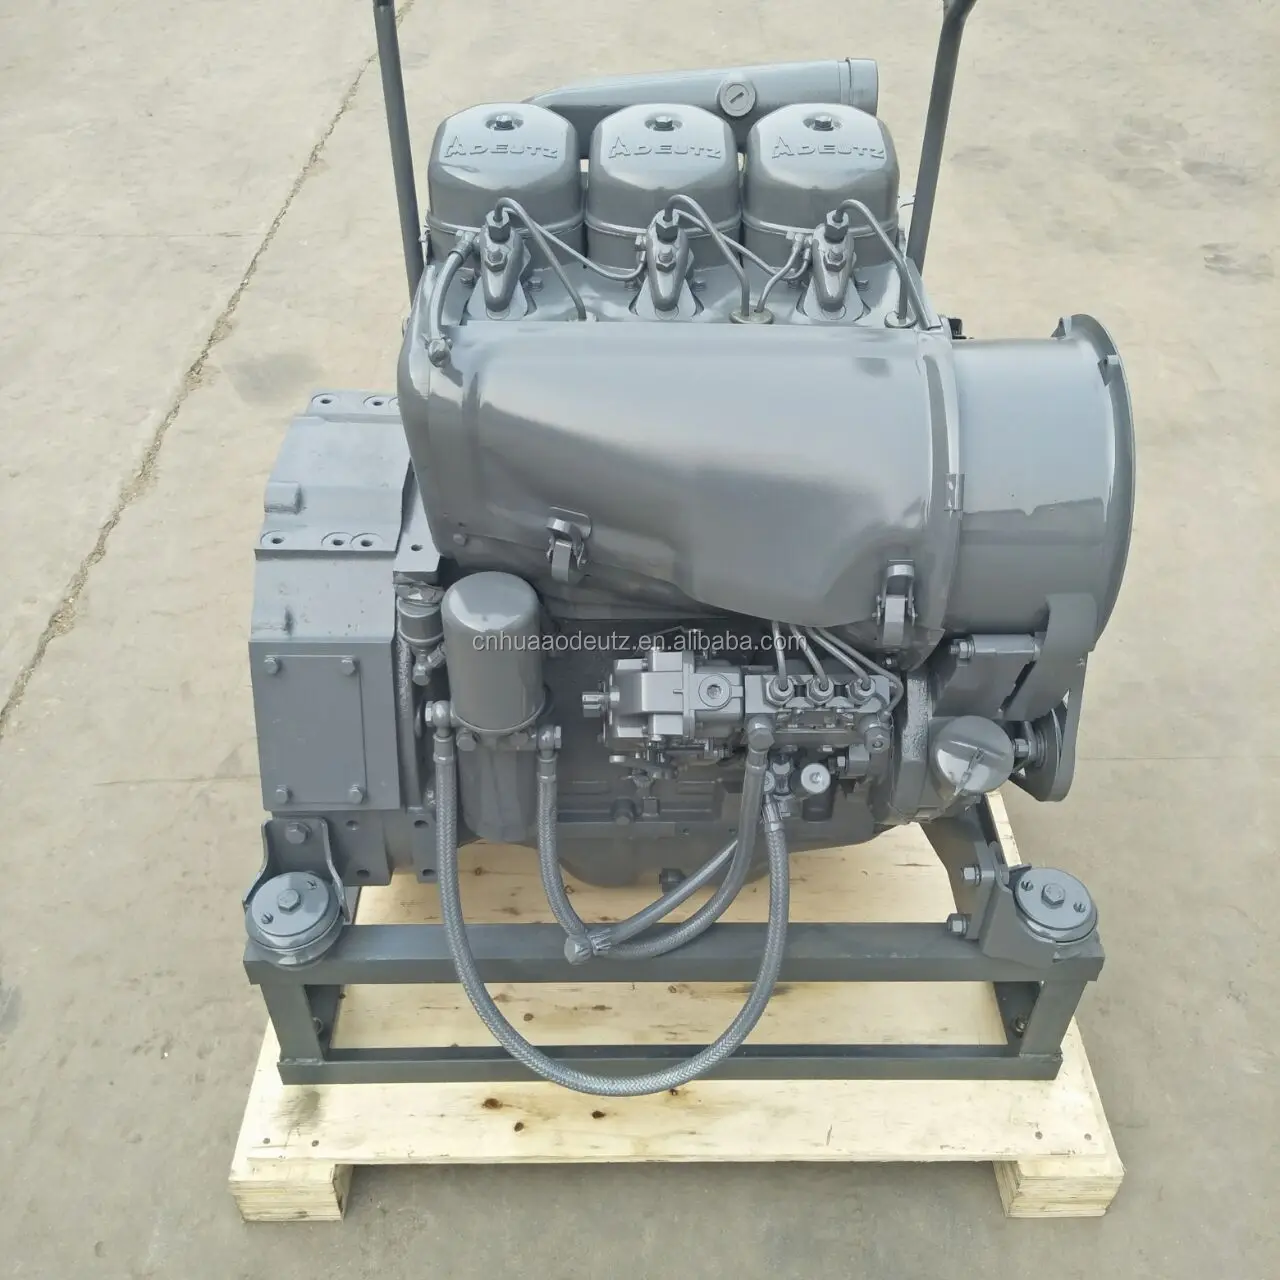 f6l914 air cooled diesel engine buy 高品质道依茨风冷柴油发动机